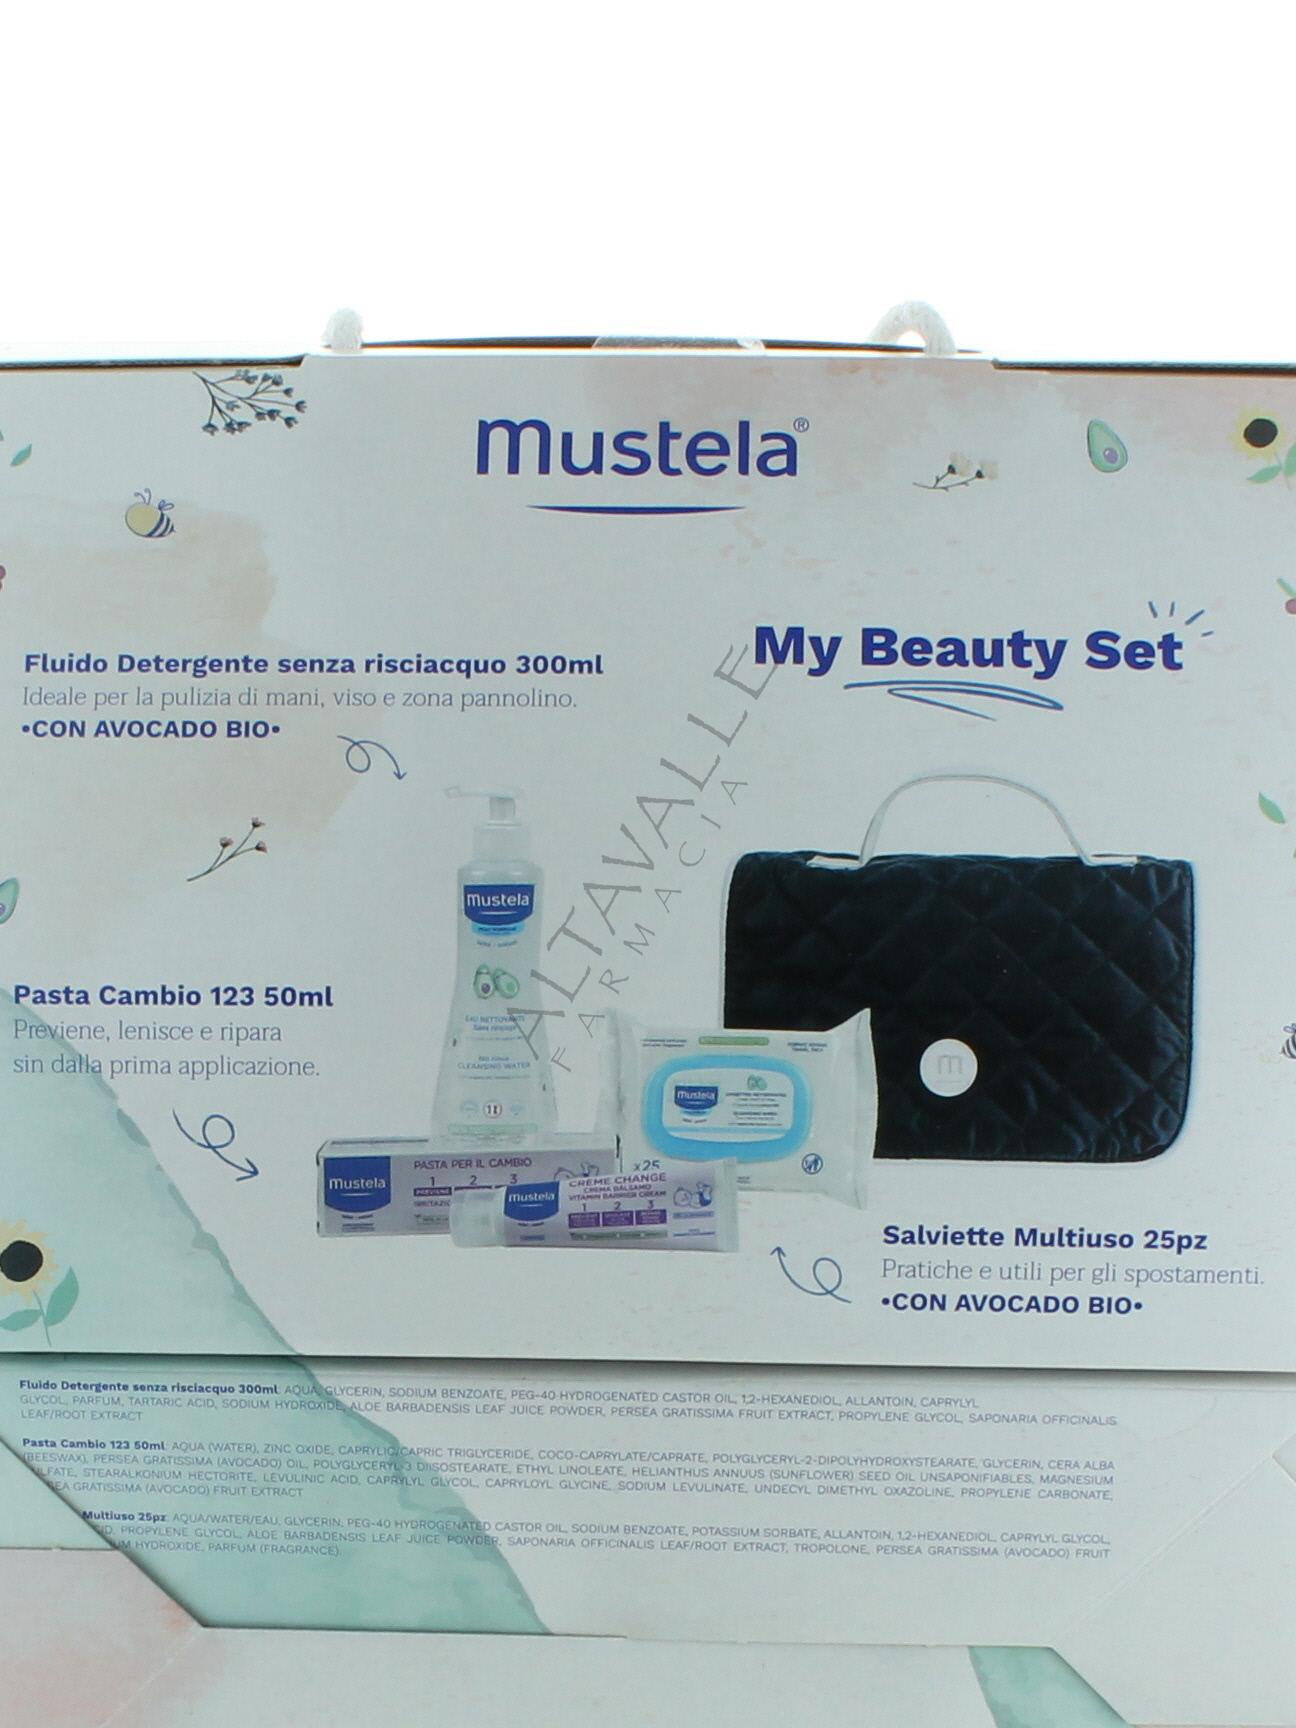 Mustela Fluido Detergente Senza Risciacquo 300ml by Mustela